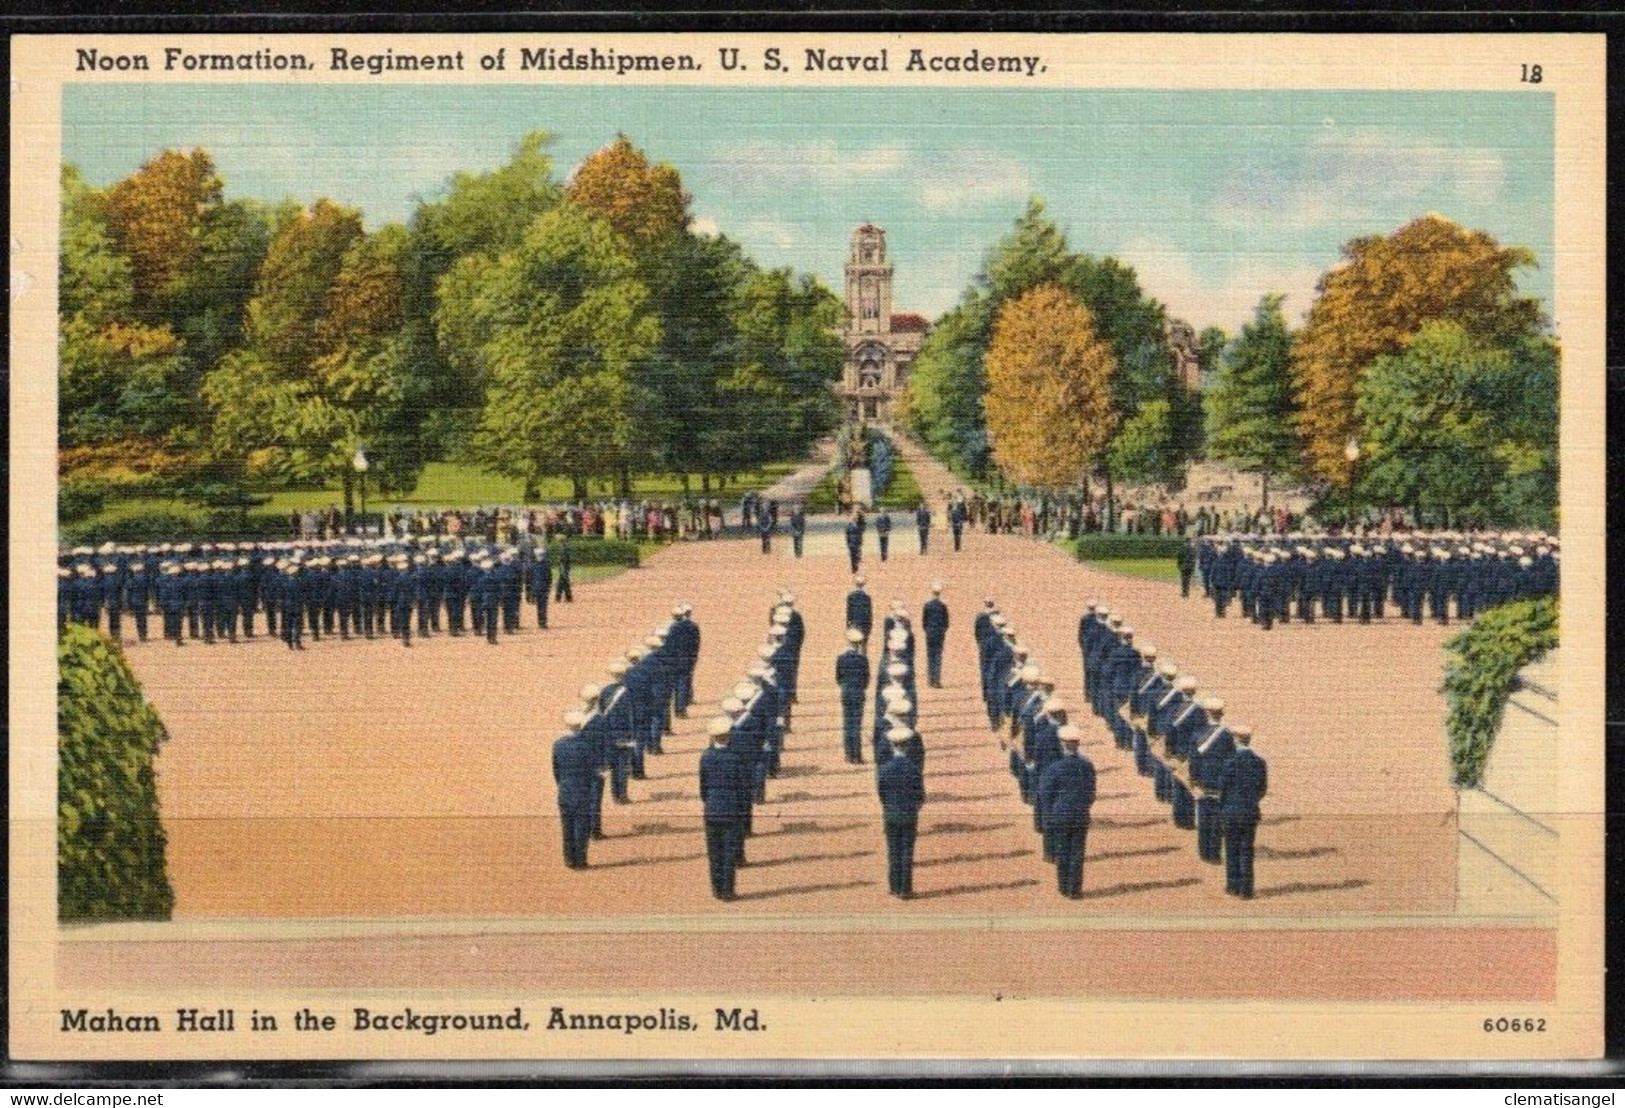 434b * ANNAPOLIS * U.S.NAVAL ACADEMY * NOON FORMATION * REGIMENT OF MIDSHIPMEN **!! - Annapolis – Naval Academy